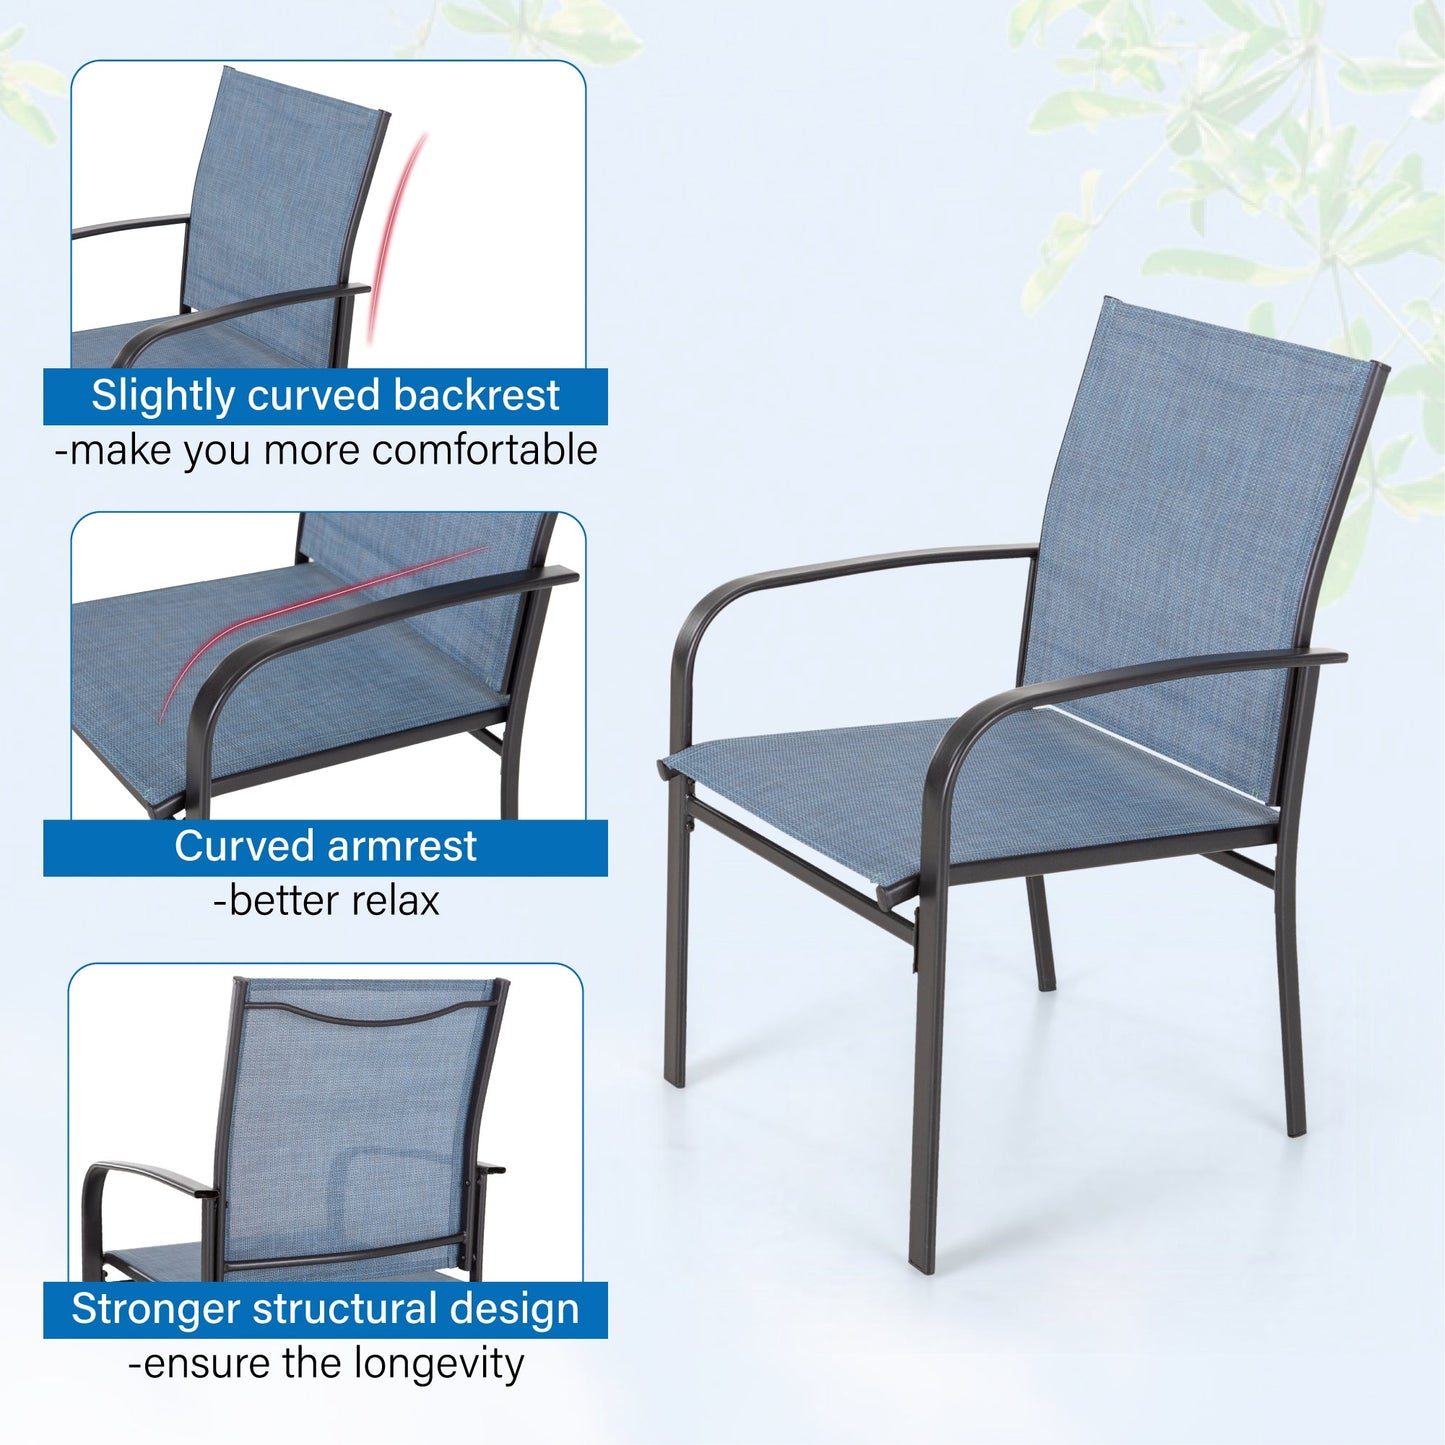 Sophia & William Outdoor Patio Dining Chair - Textilene - Set of 4 - Blue